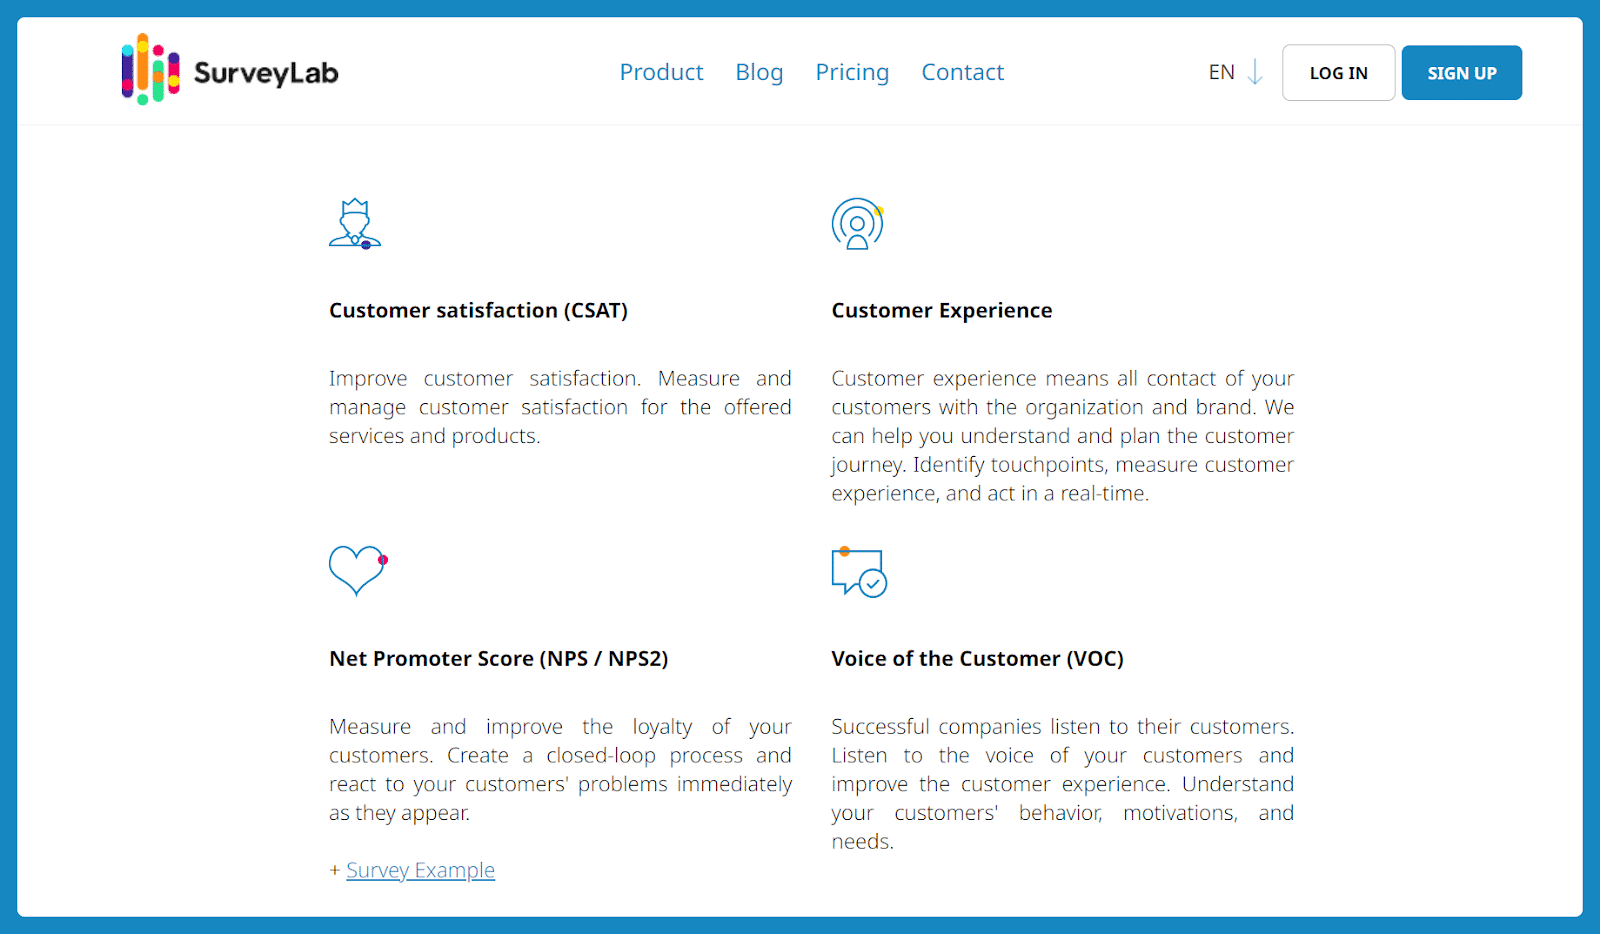 SurveyLab's features